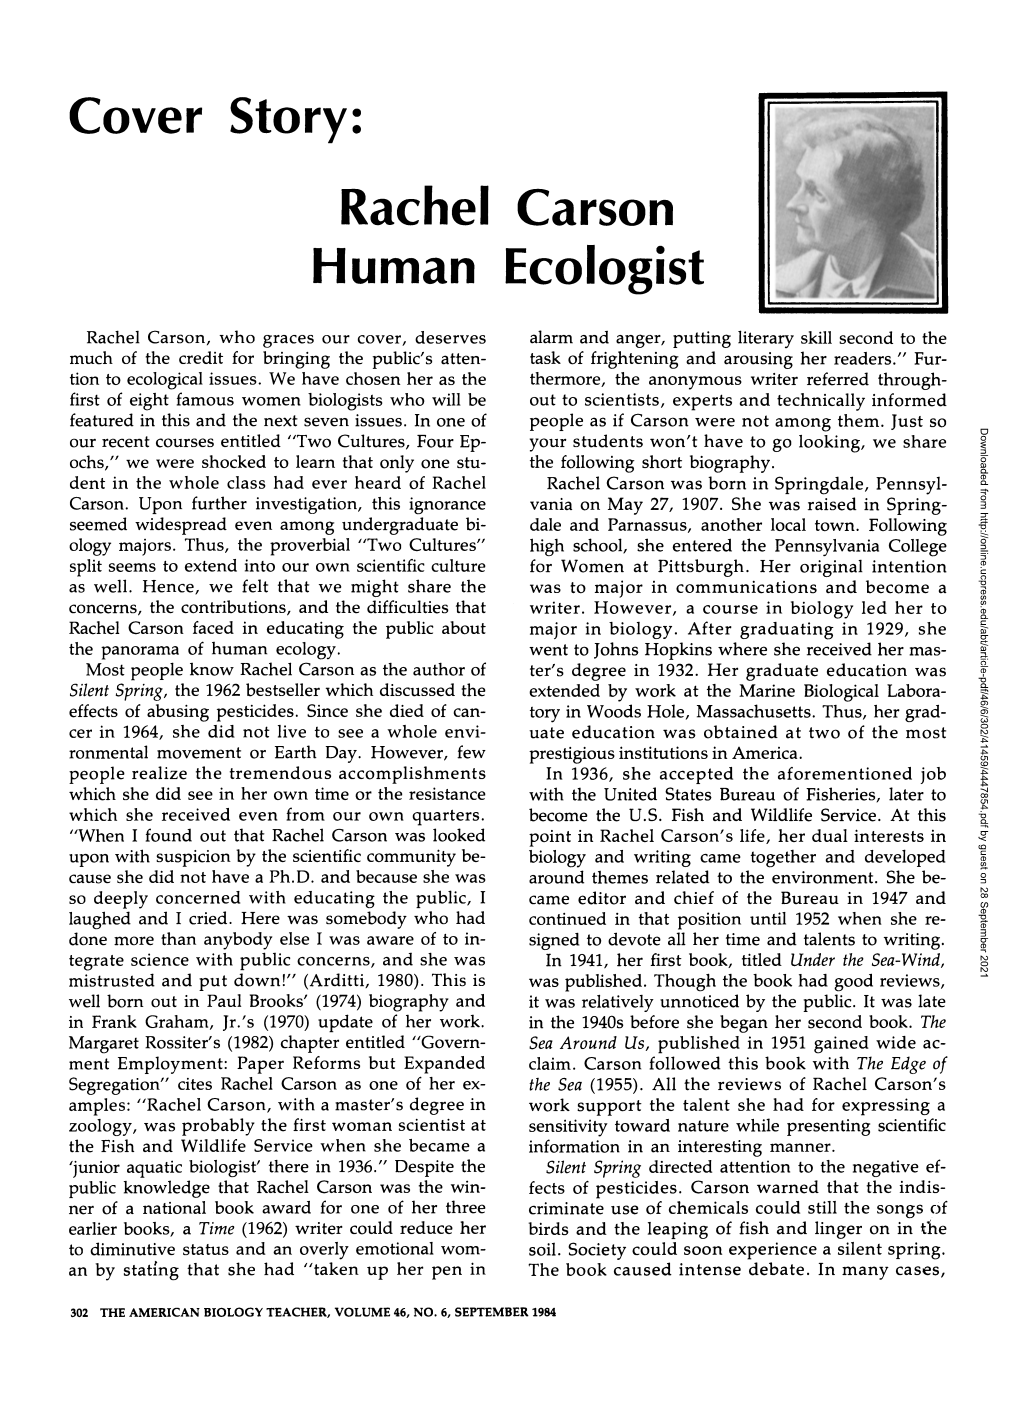 Rachel Carson Human Ecologist